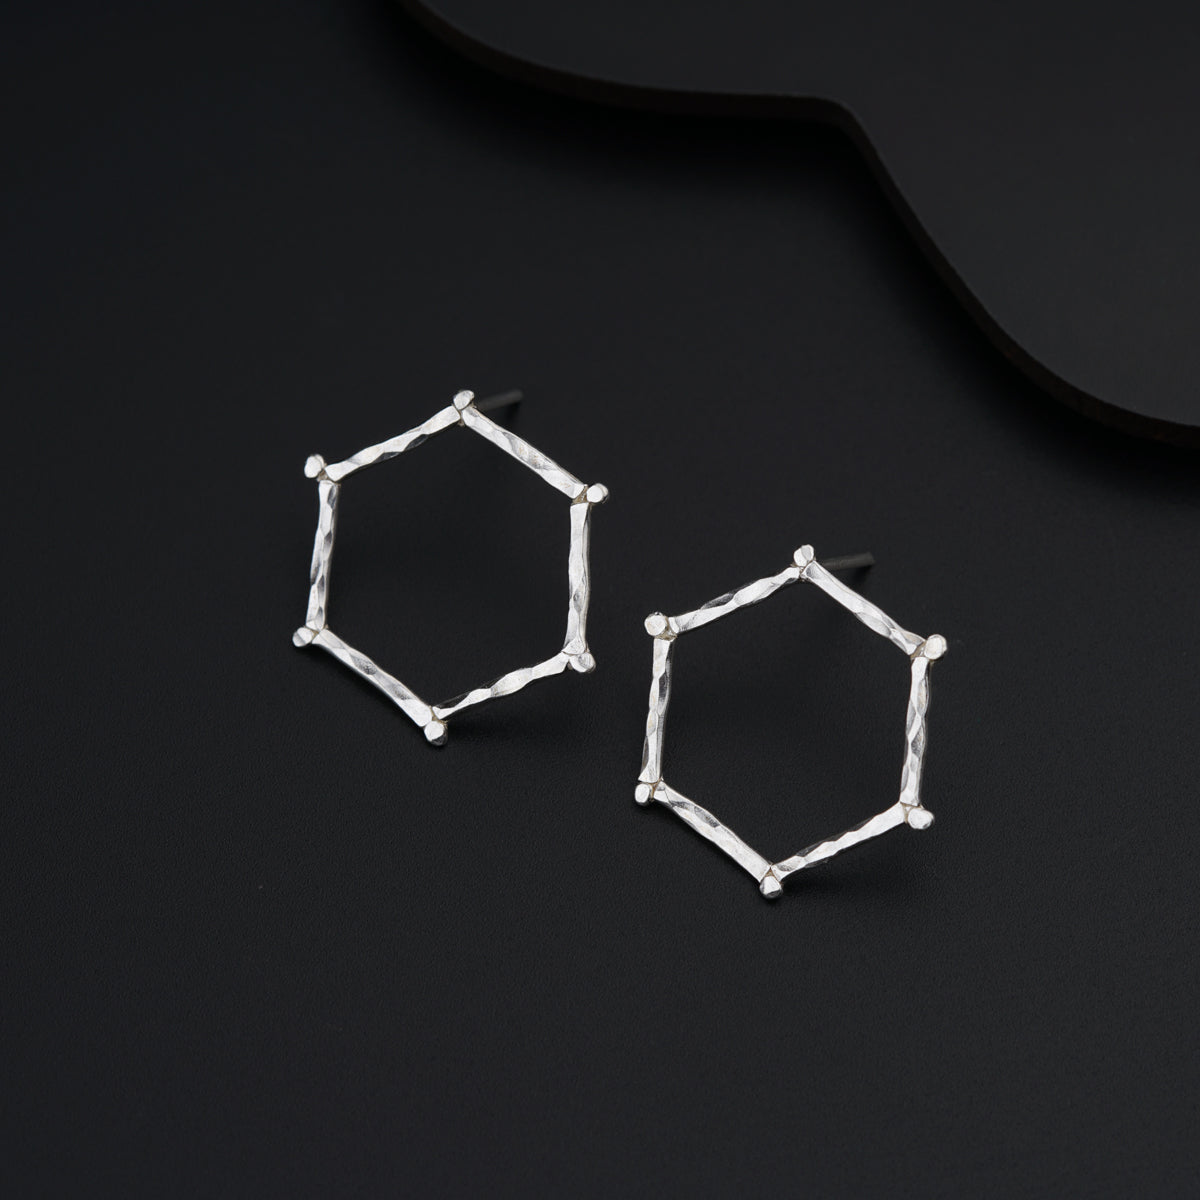 a pair of hexagonal earrings on a black surface